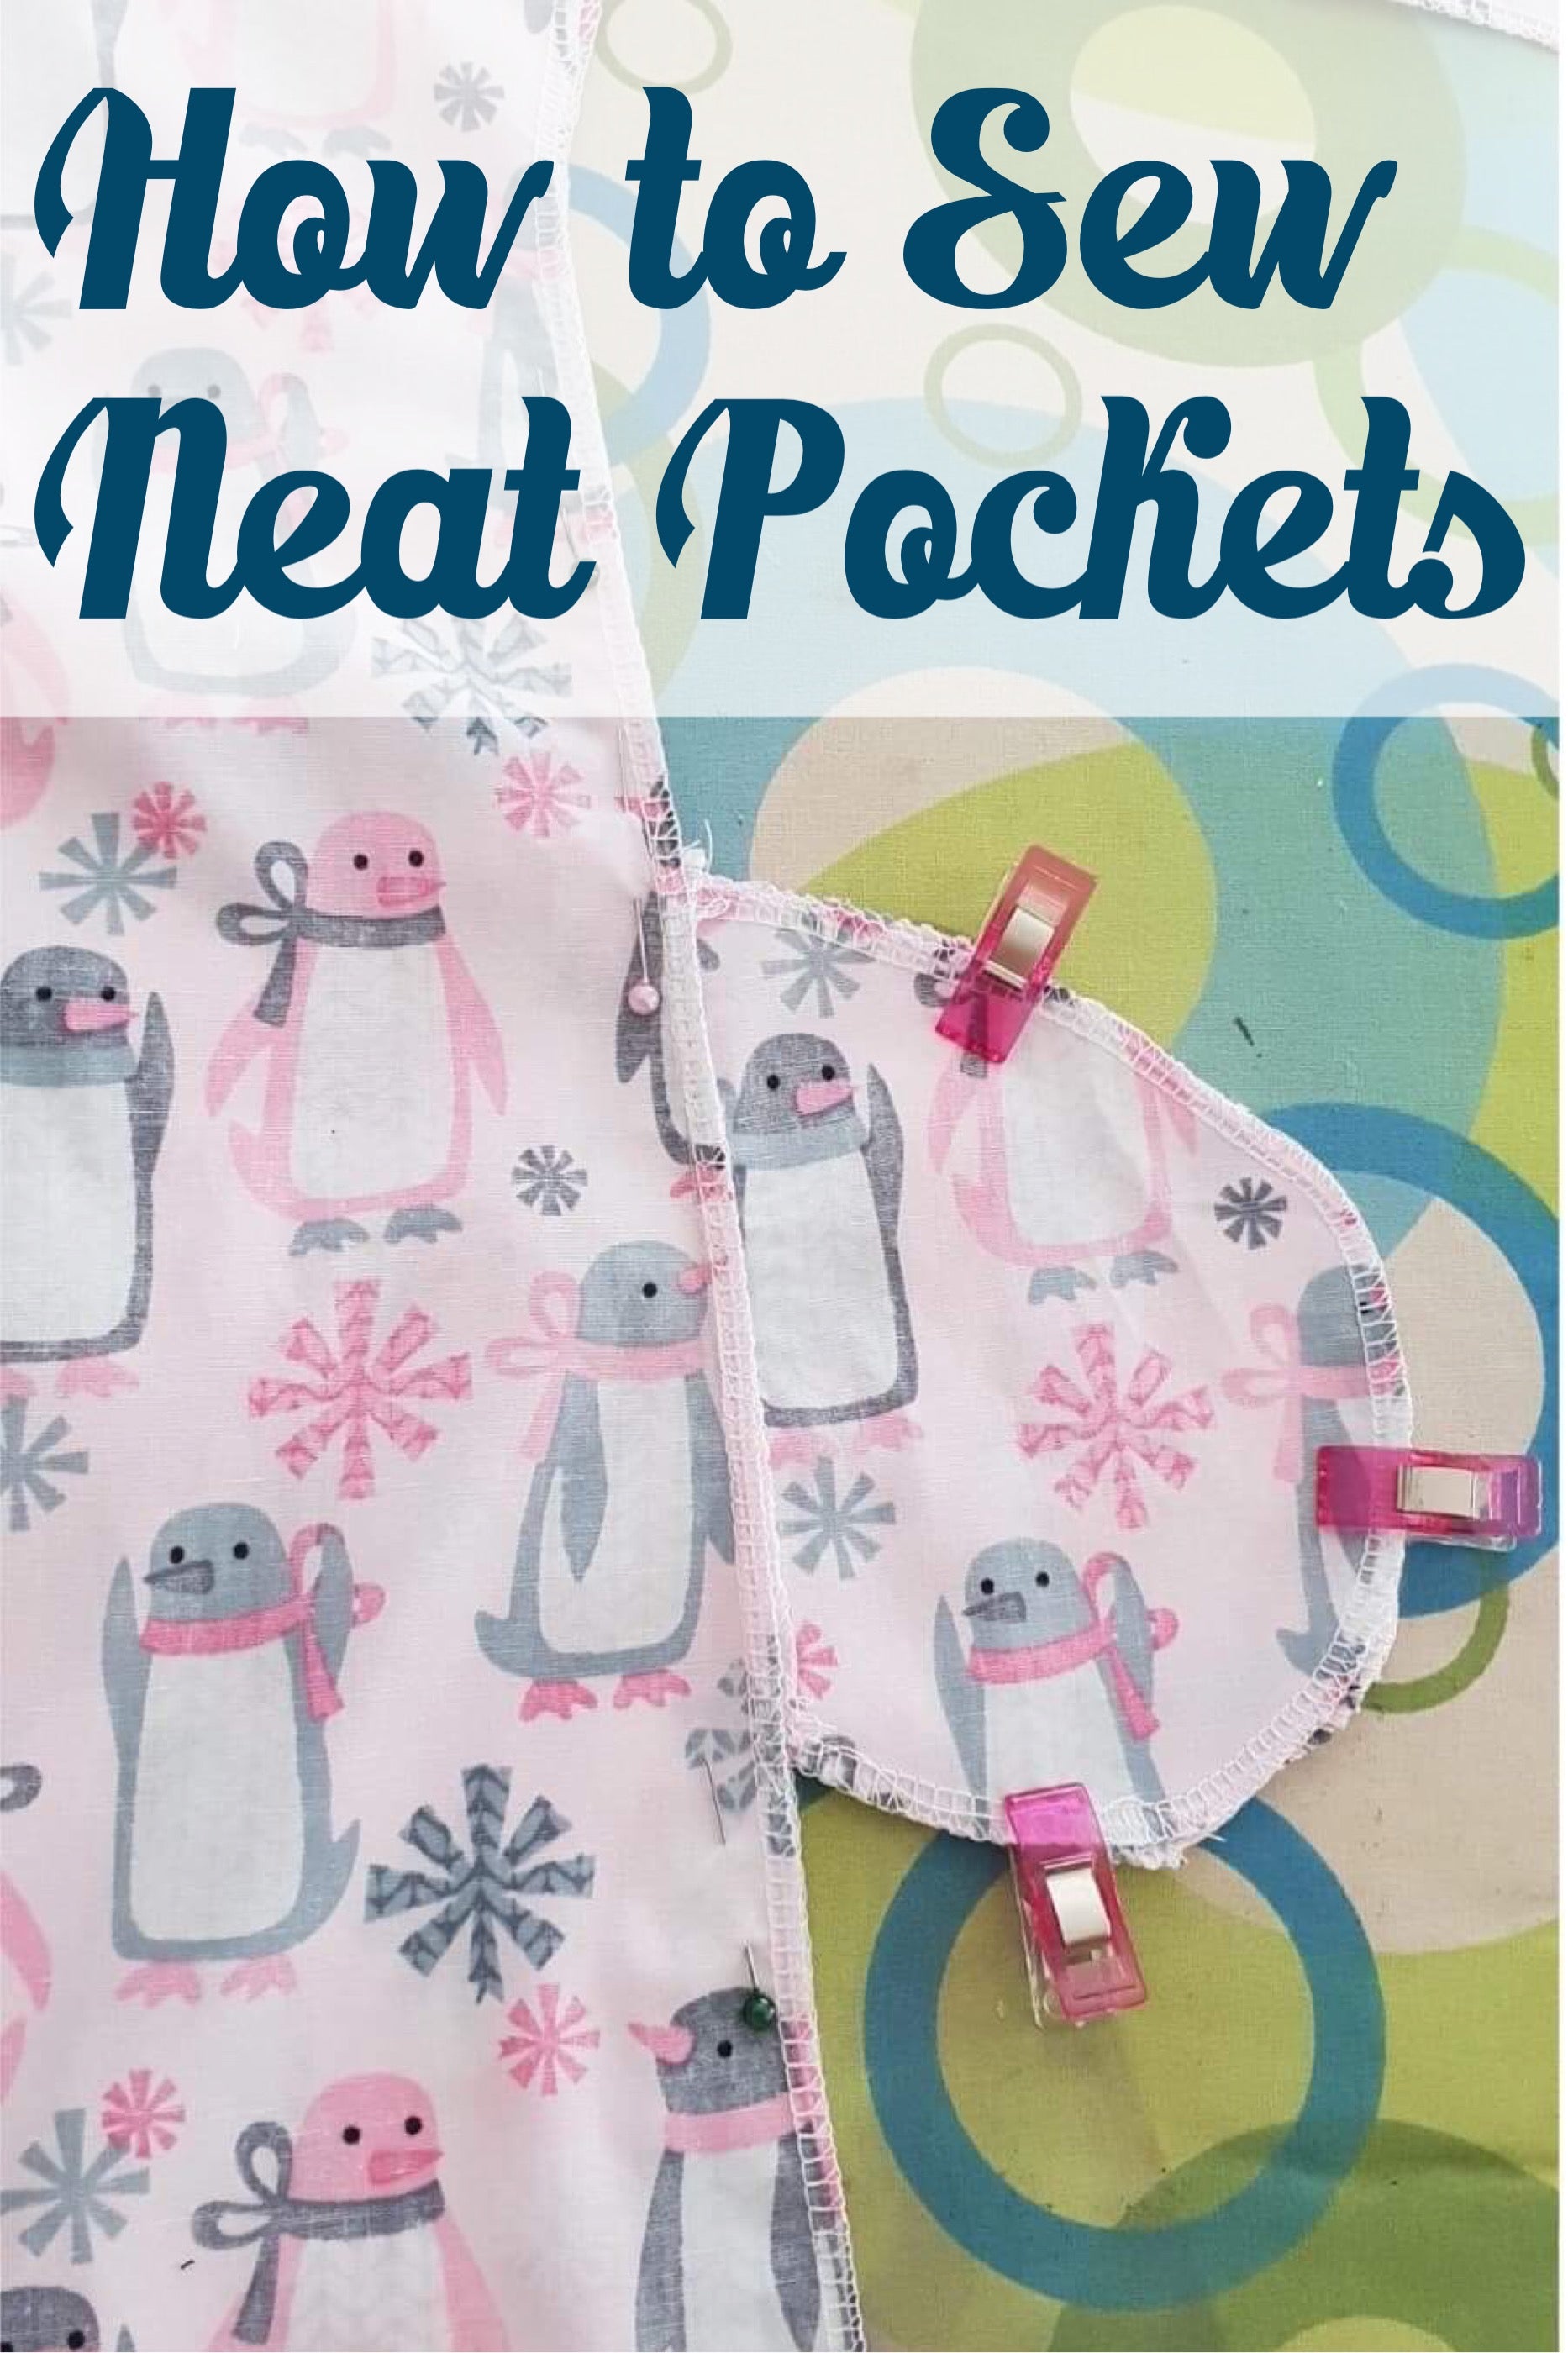 How to Sew Nice Pockets